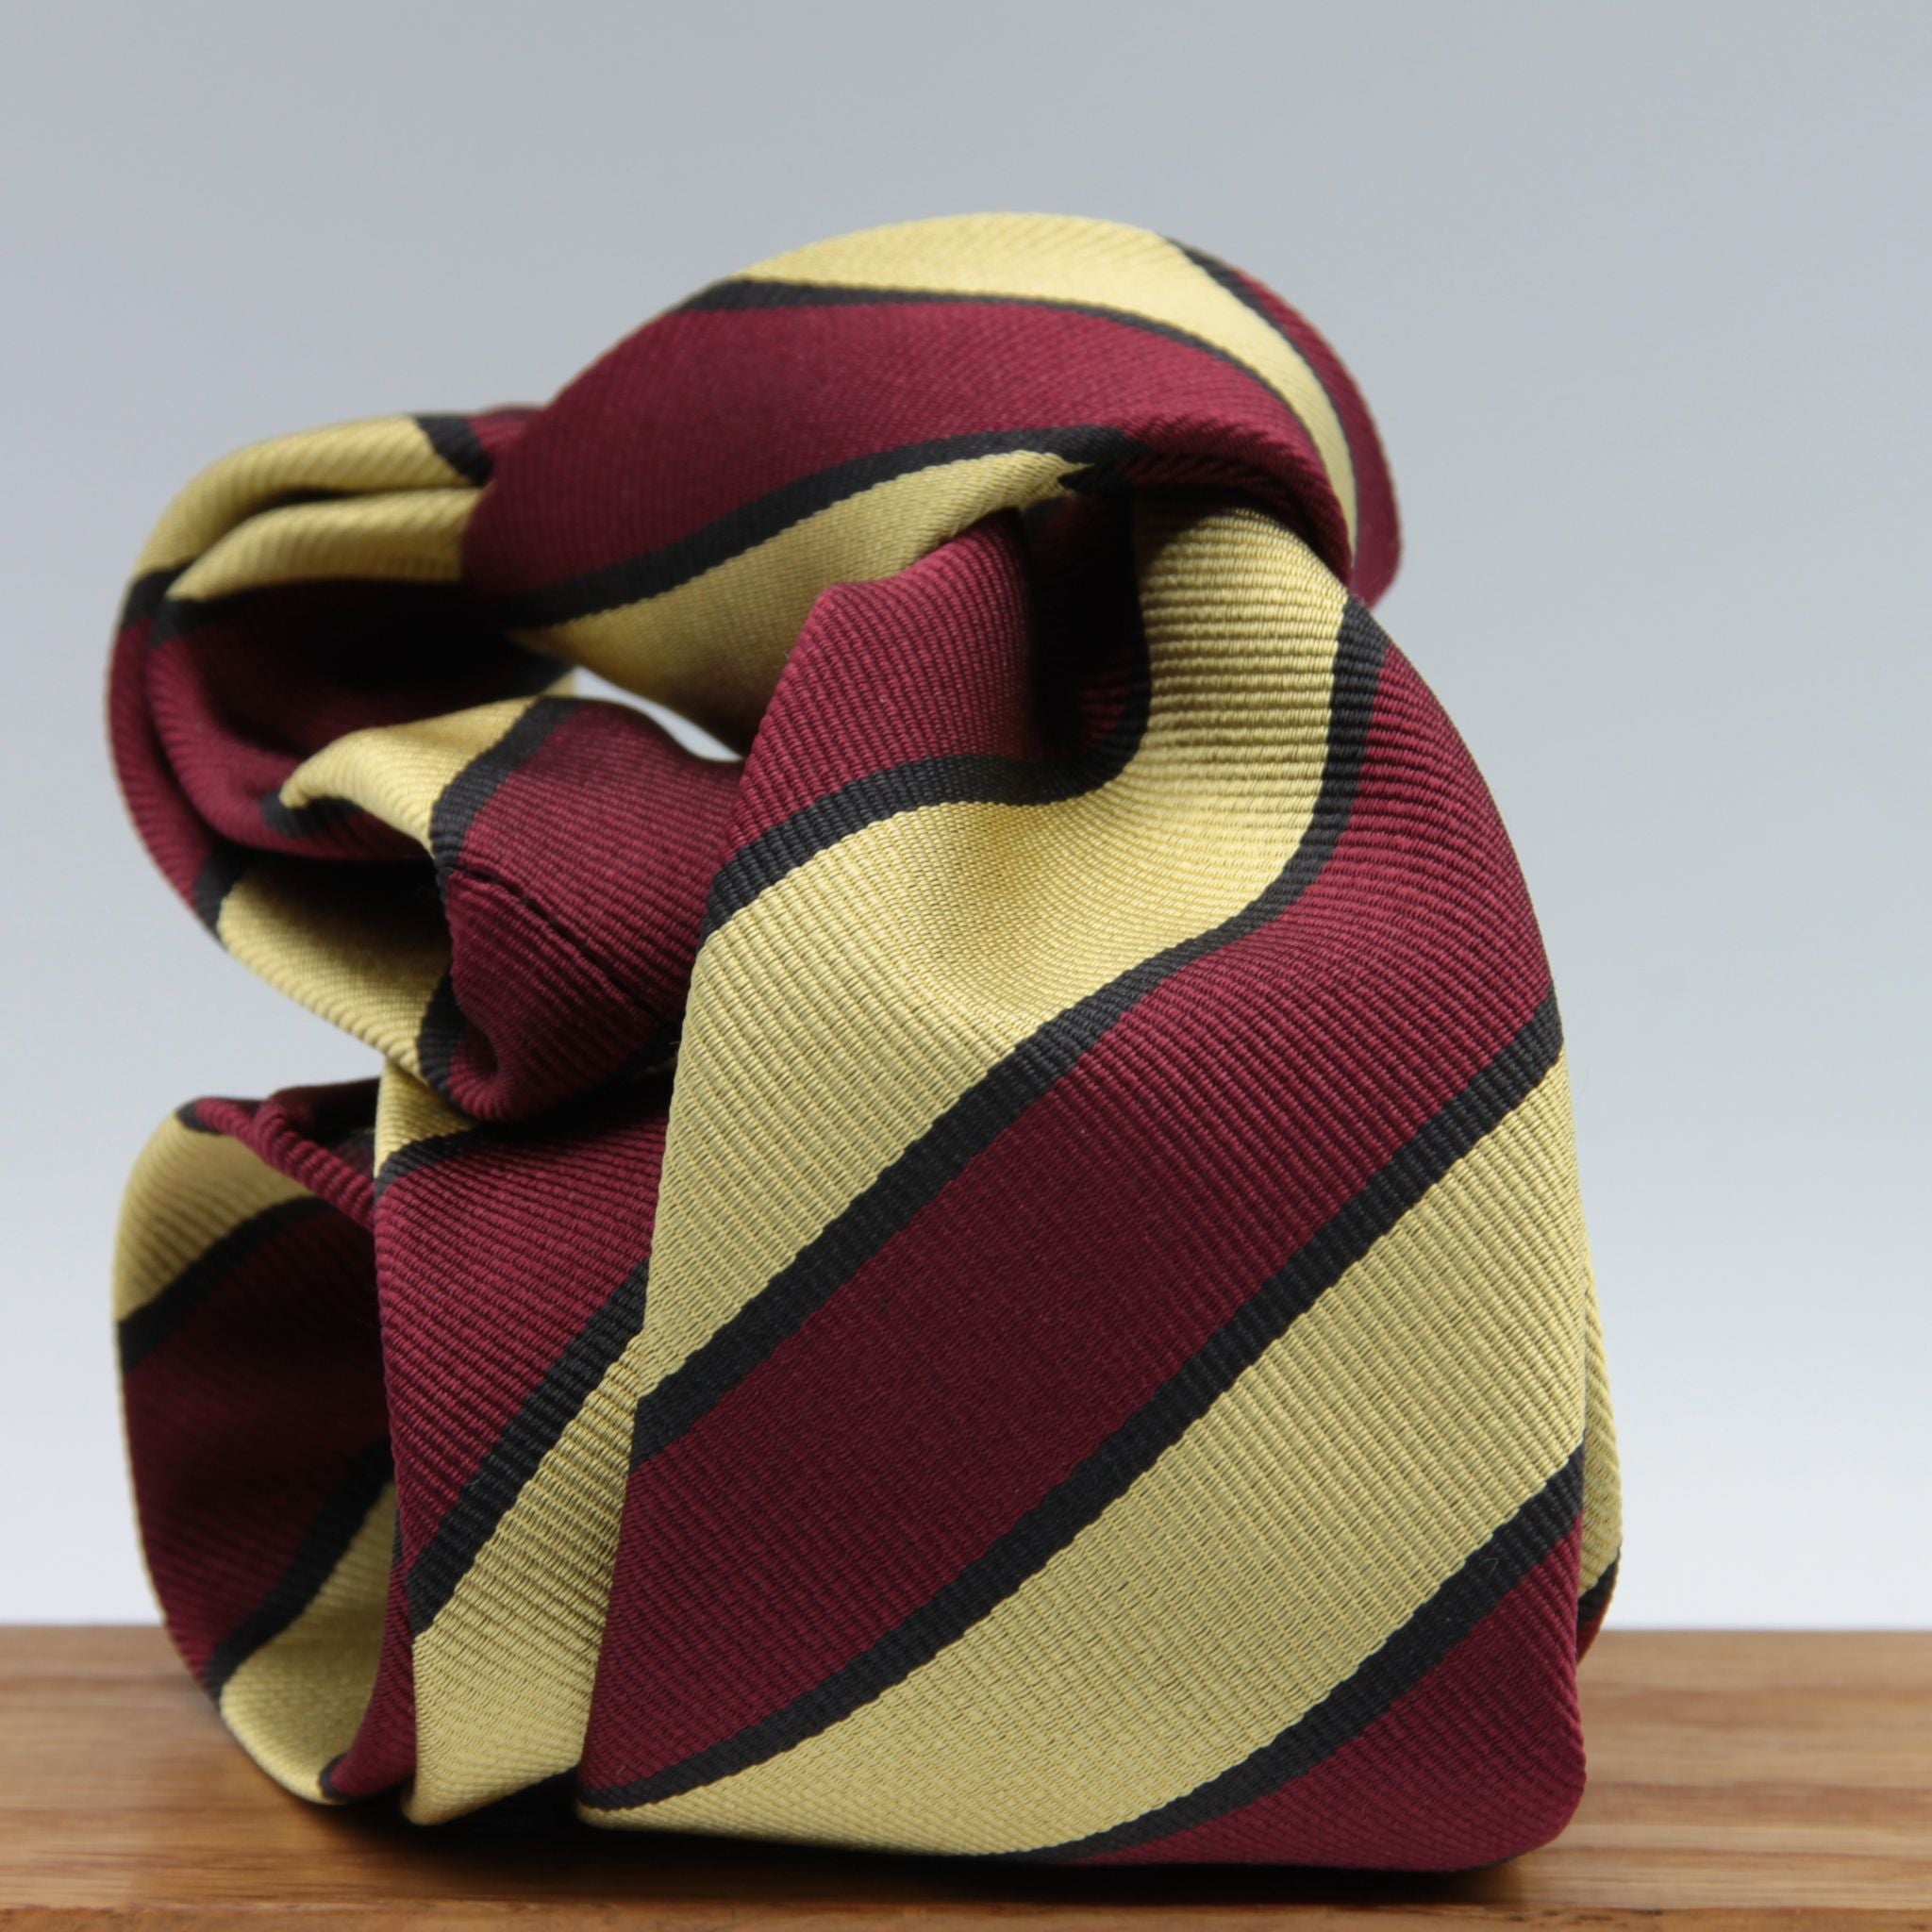 Cruciani & Bella 100% Silk Slim Shape Jacquard  Unlined Regimental "West Indian Regiment" Red, Yellow and Black stripes tie Handmade in Italy 8 cm x 150 cm #5681